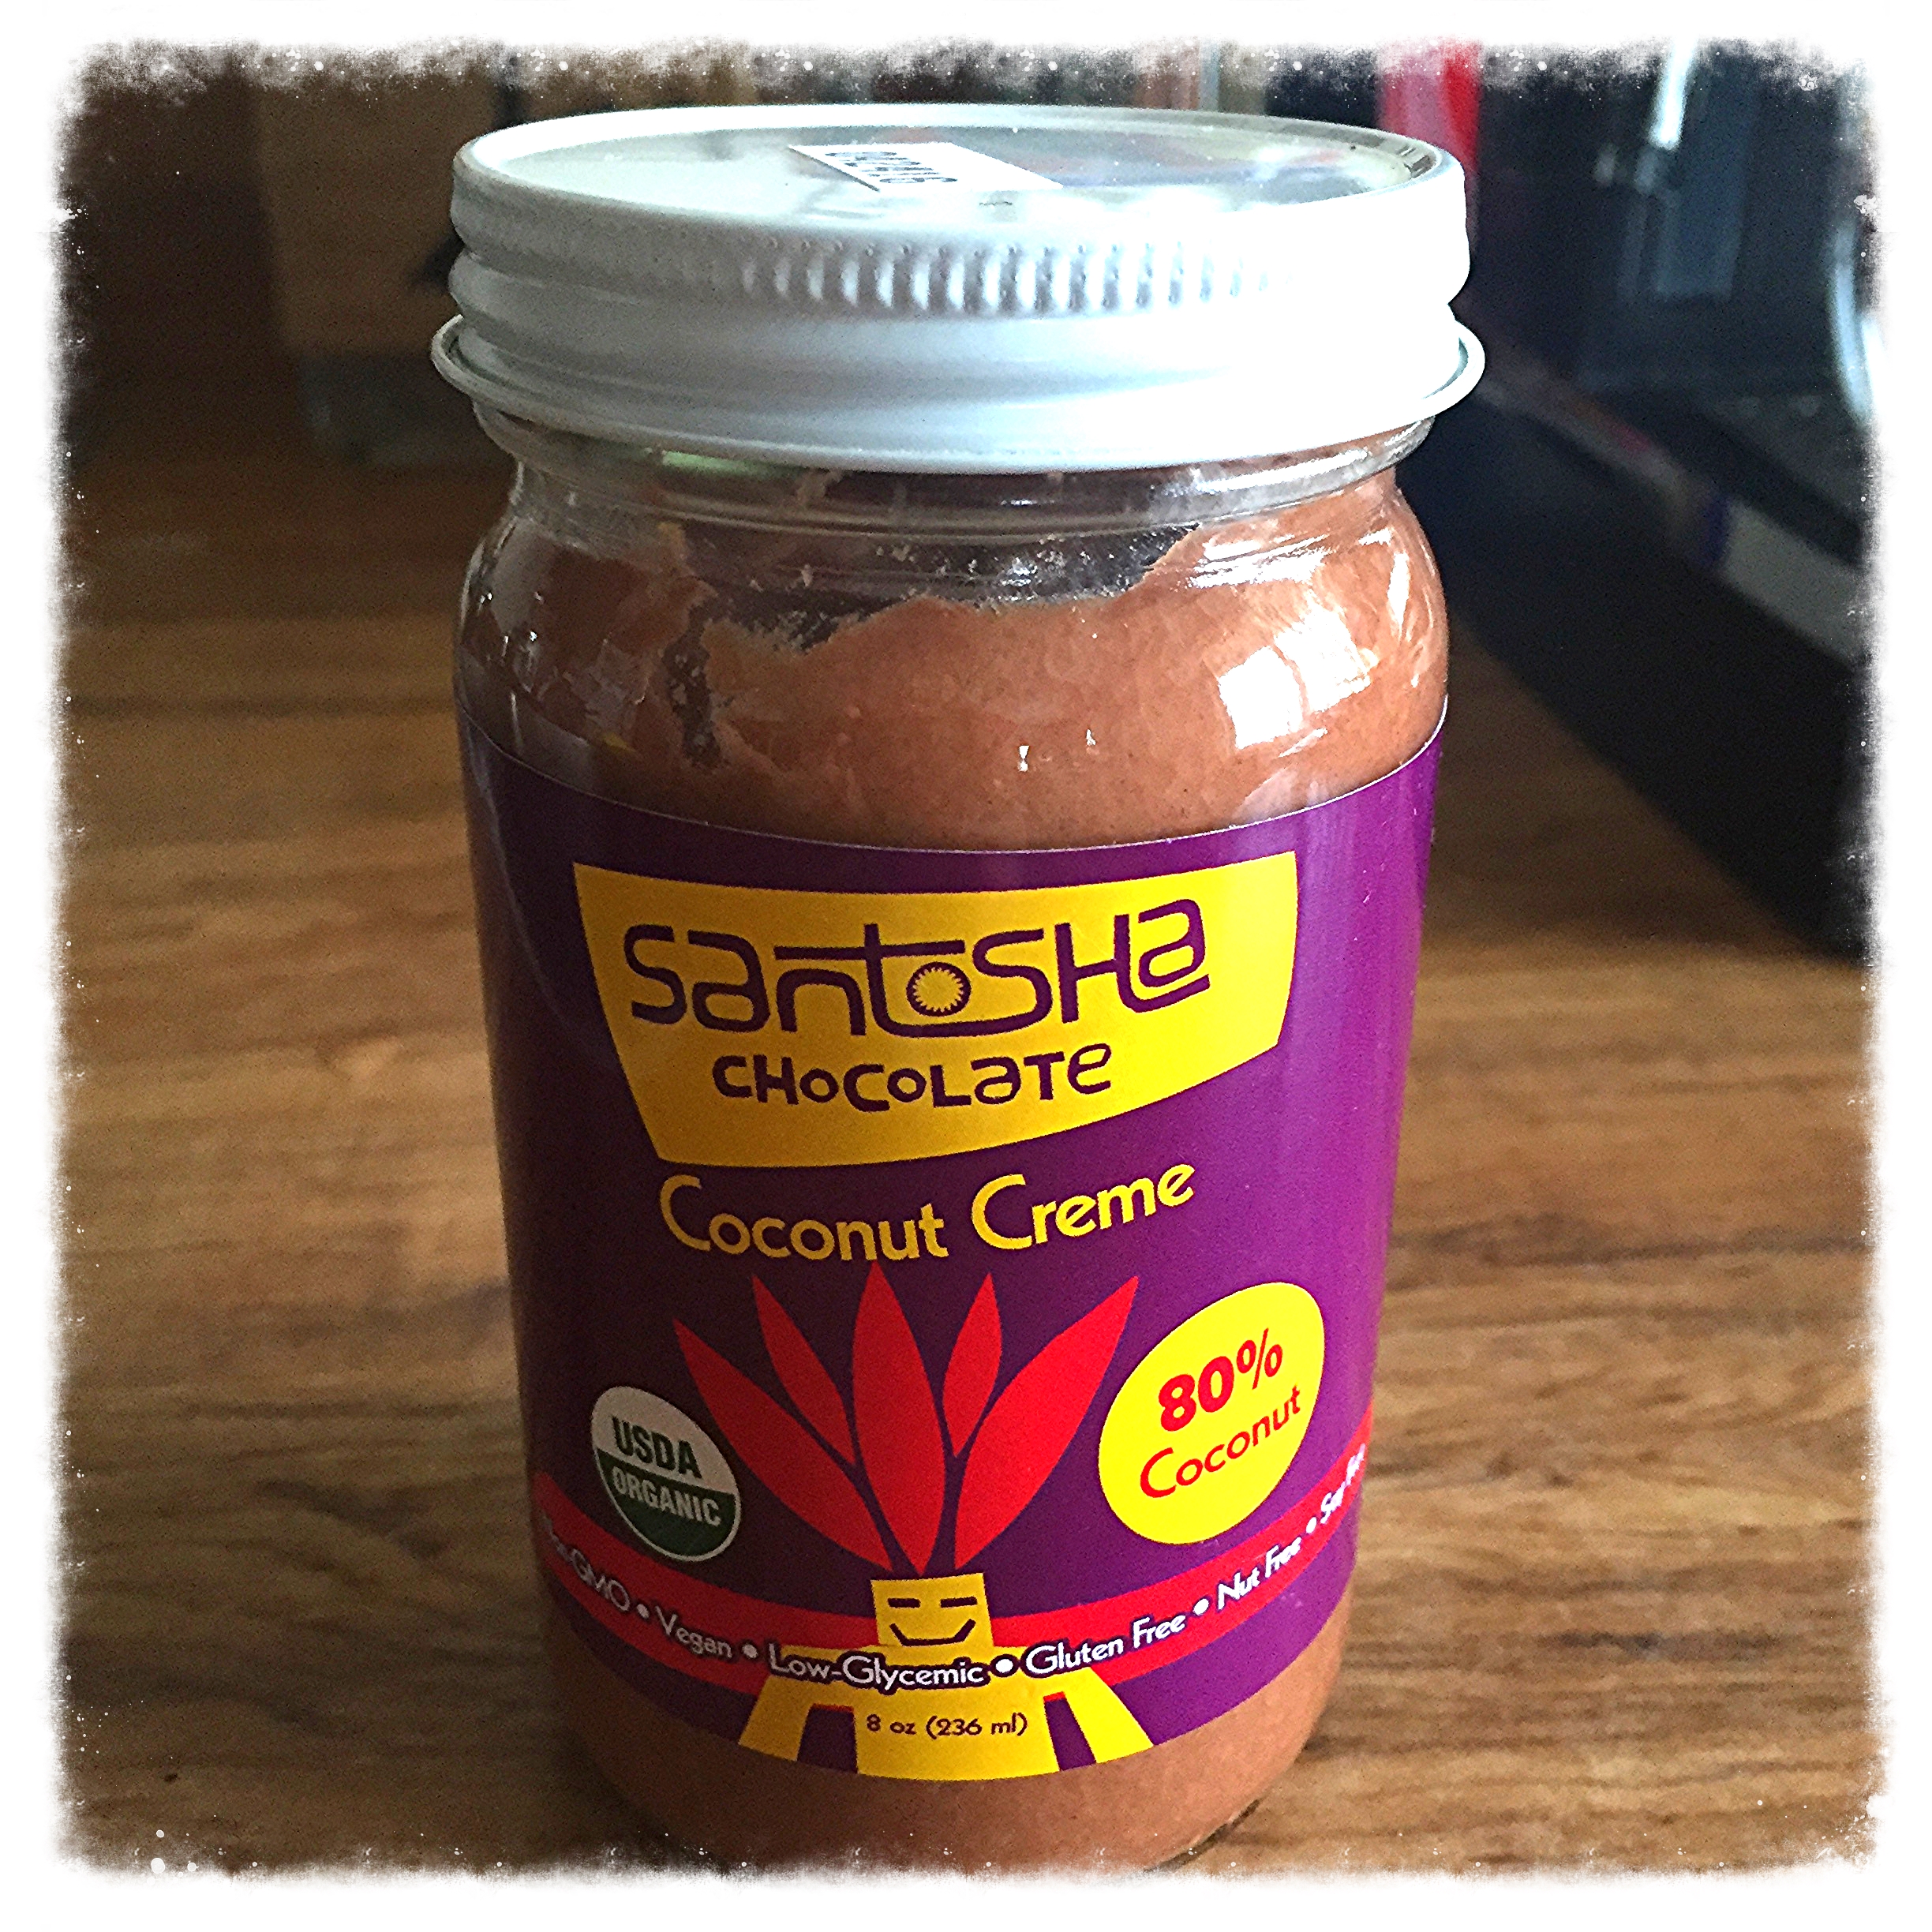 Santosha Chocolate spread